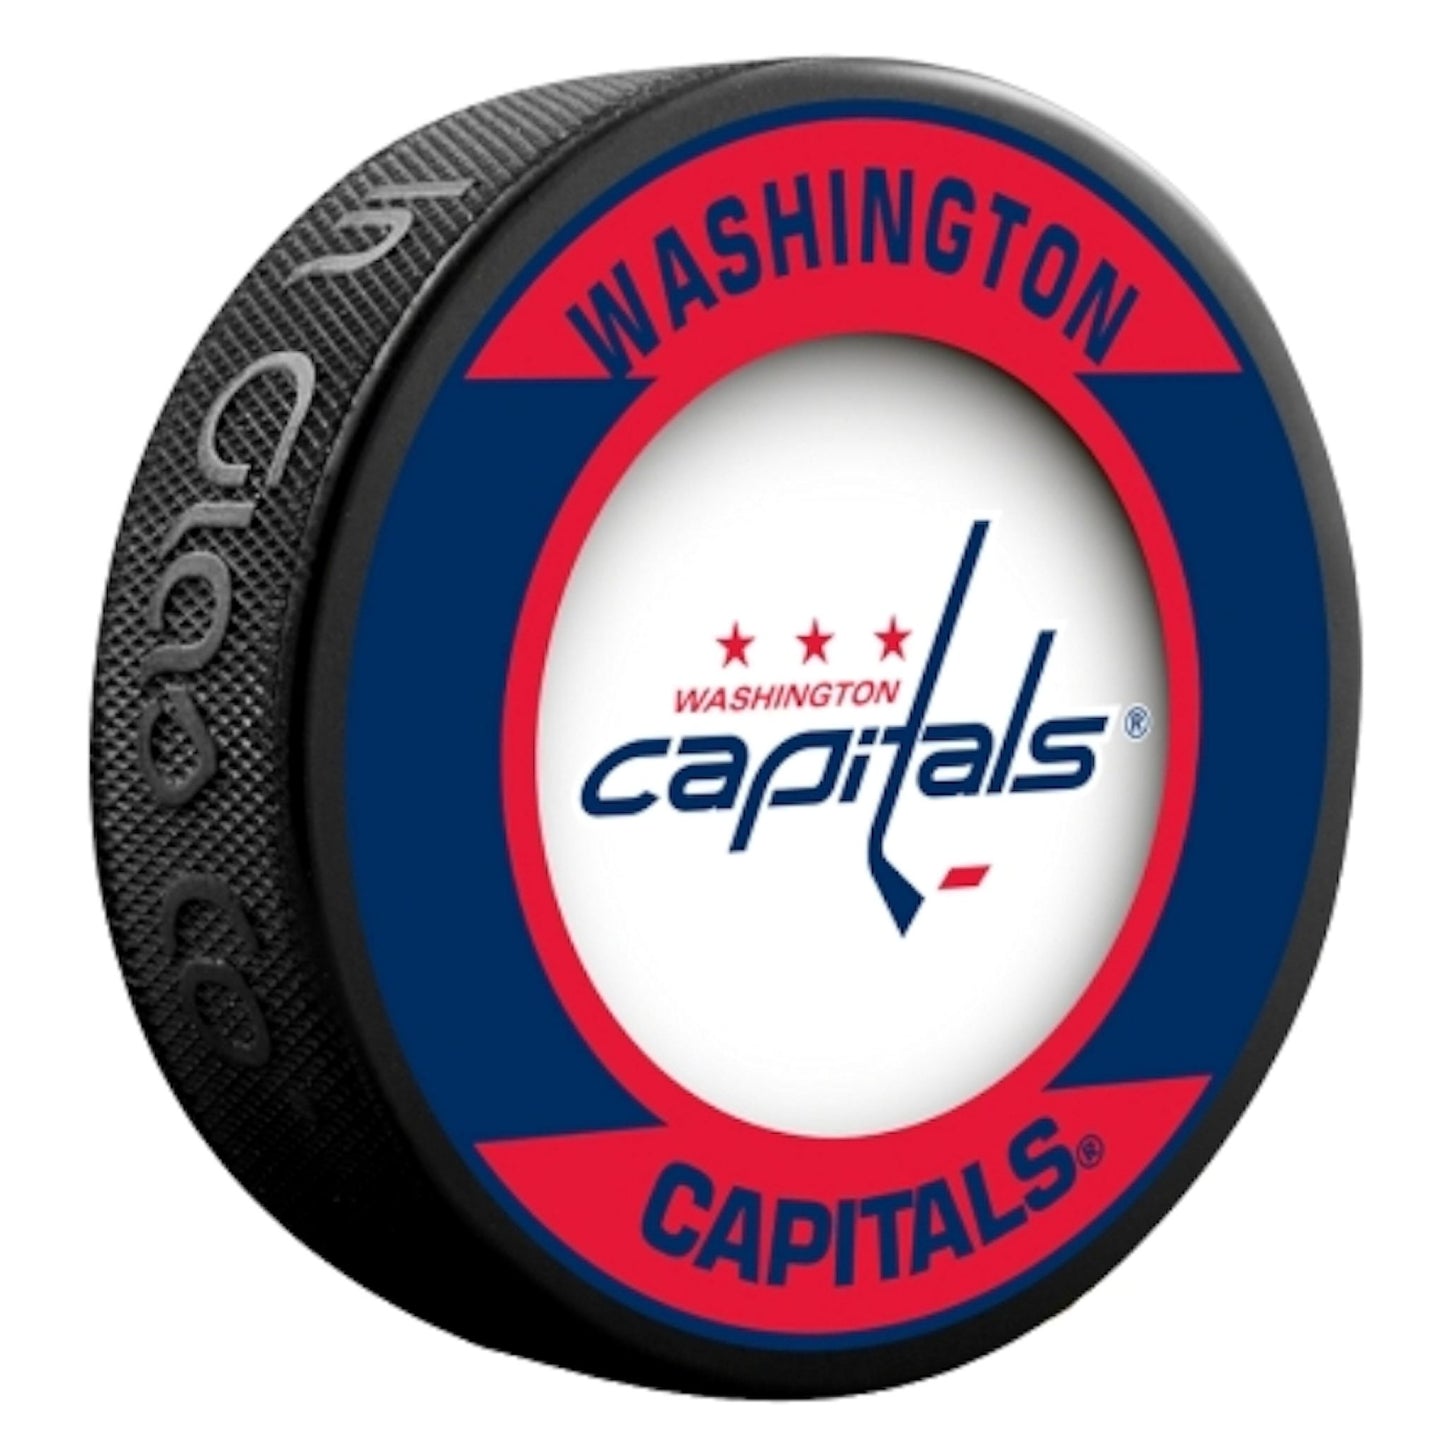 Washington Capitals Retro Series Collectible Hockey Puck